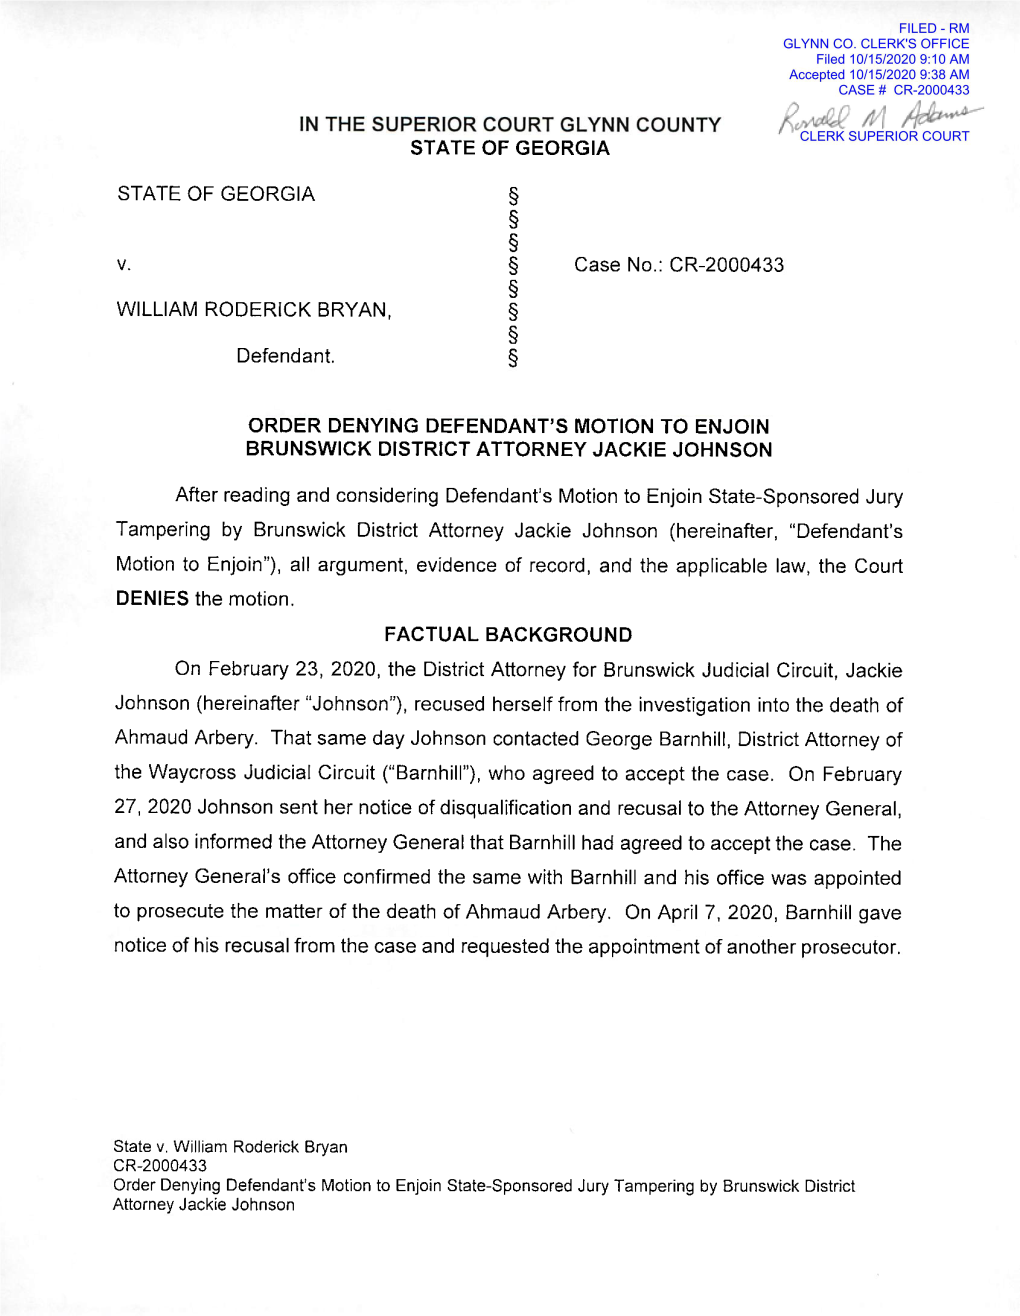 Order Denying Defendant's Motion to Enjoin Brunswick District Attorney Jackie Johnson